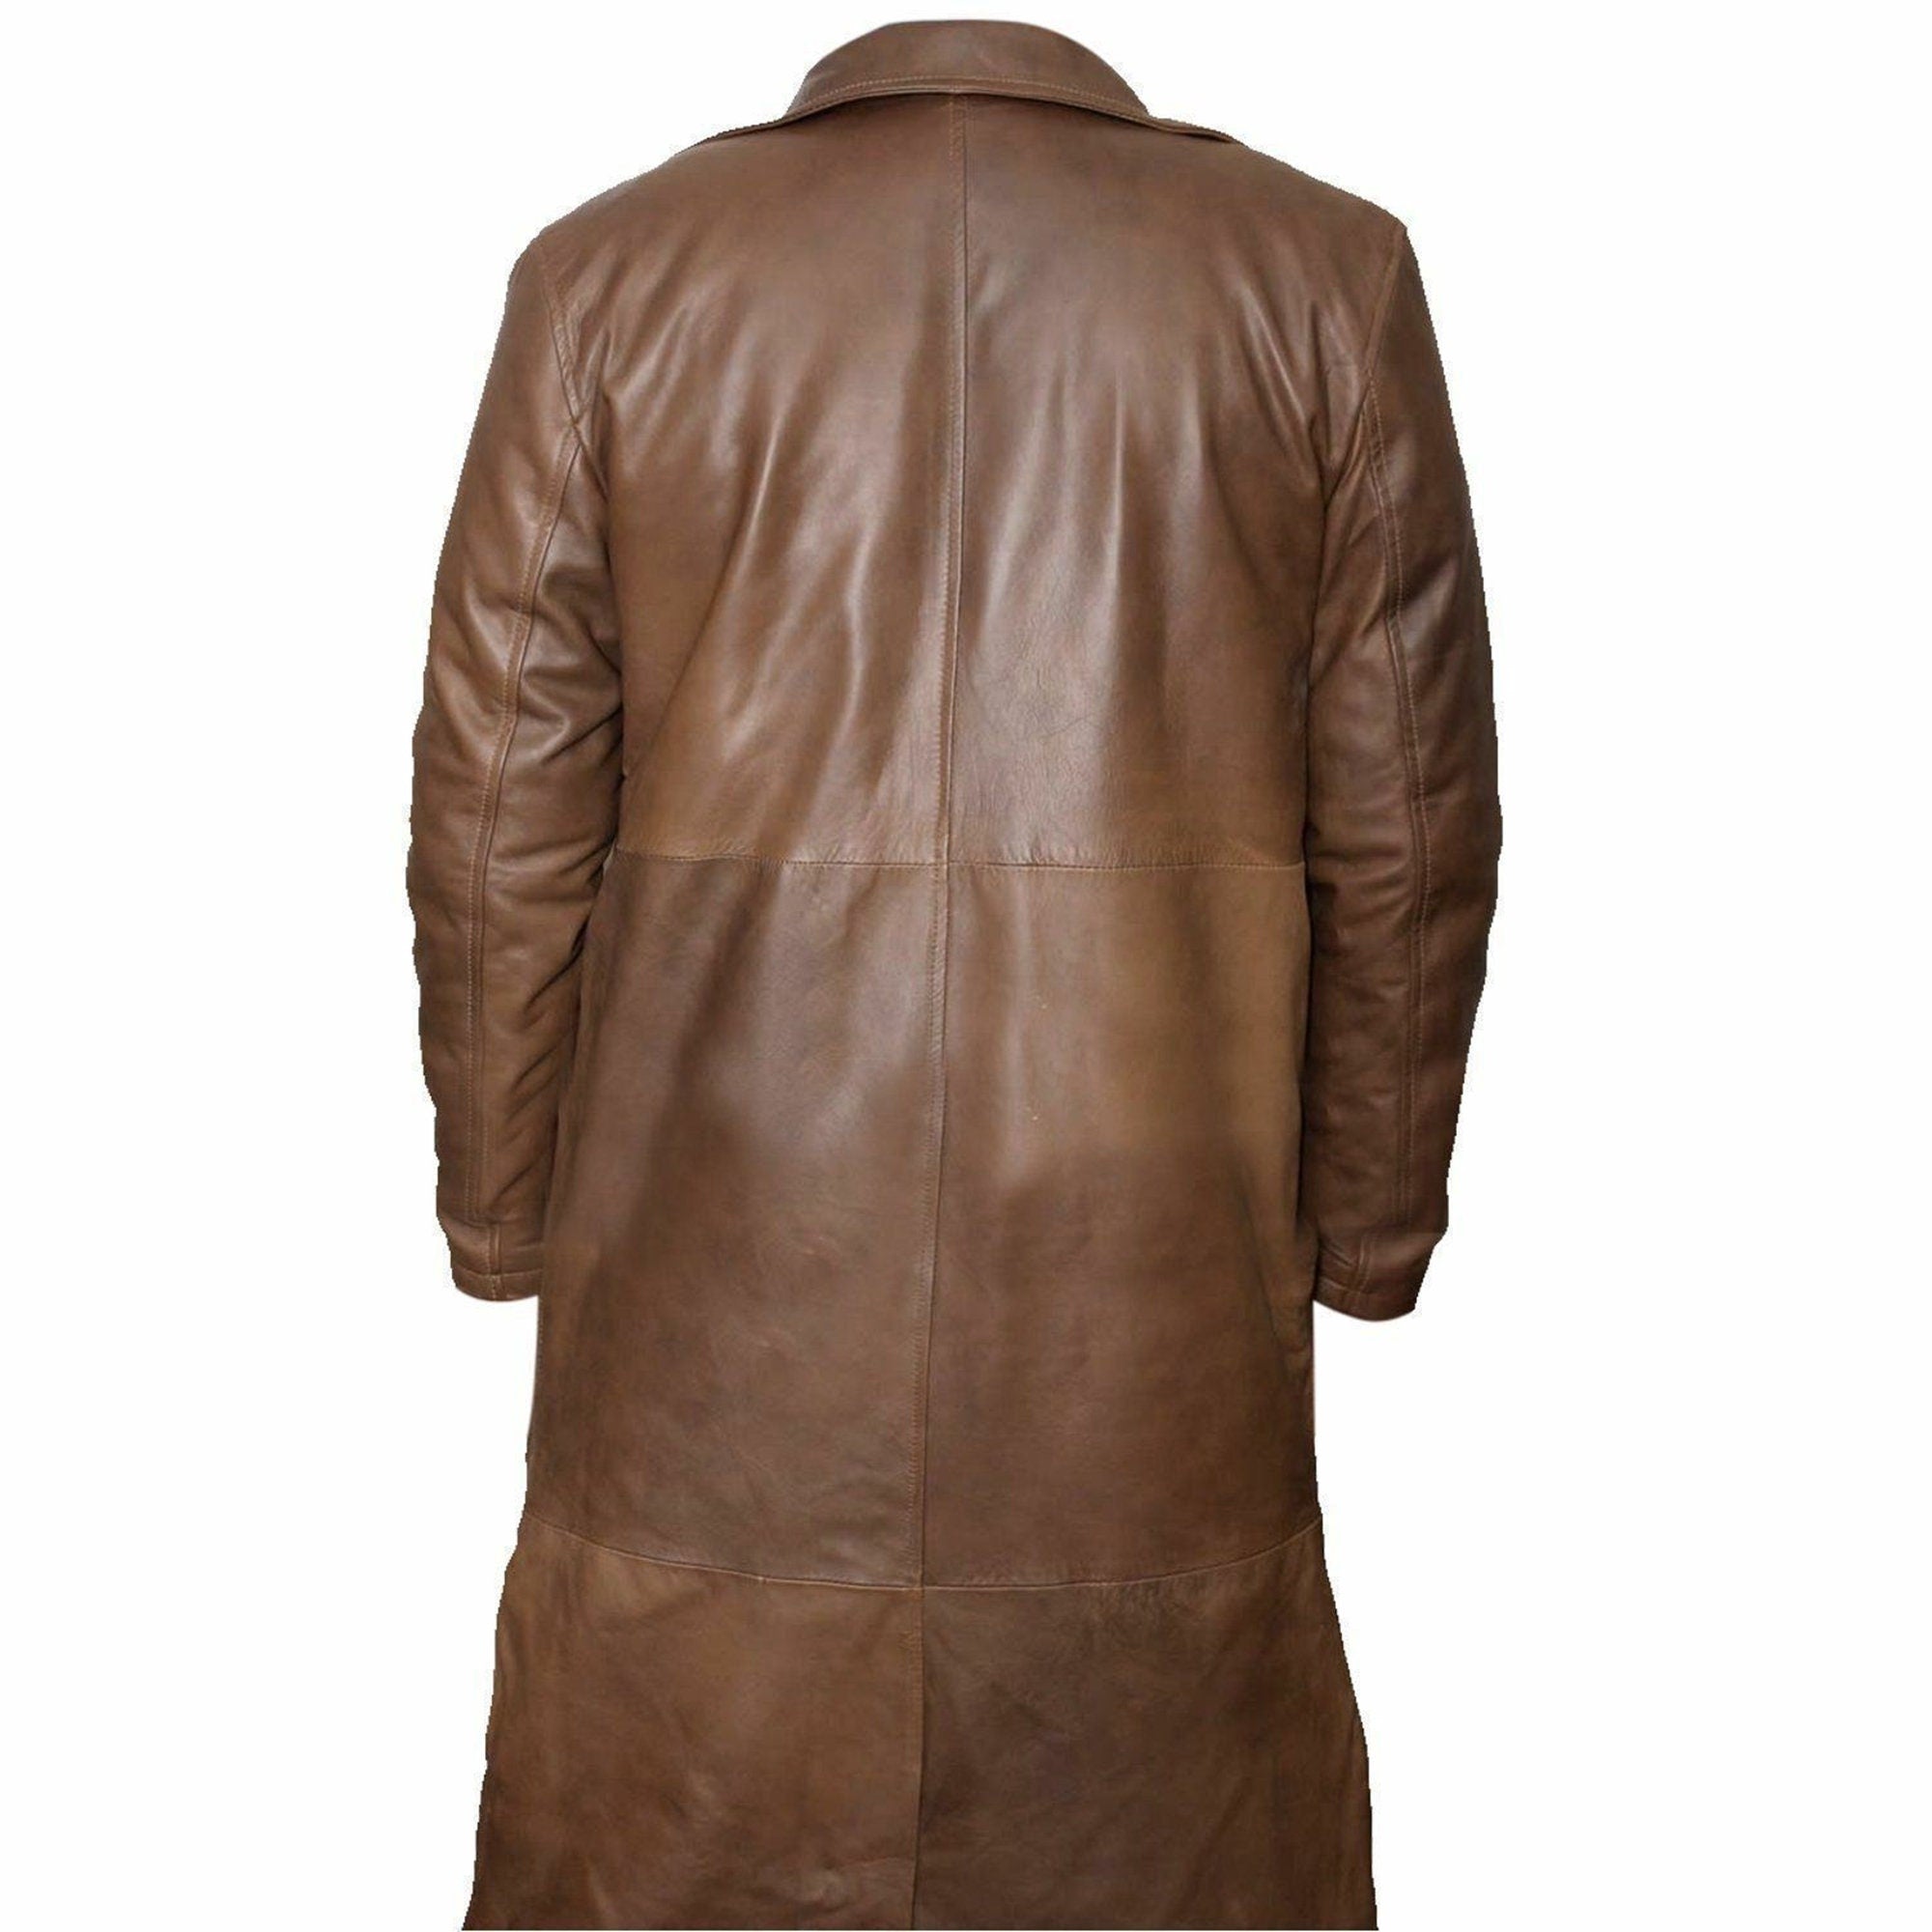 Handmade Leather Trench Coat Brown Coat For Men